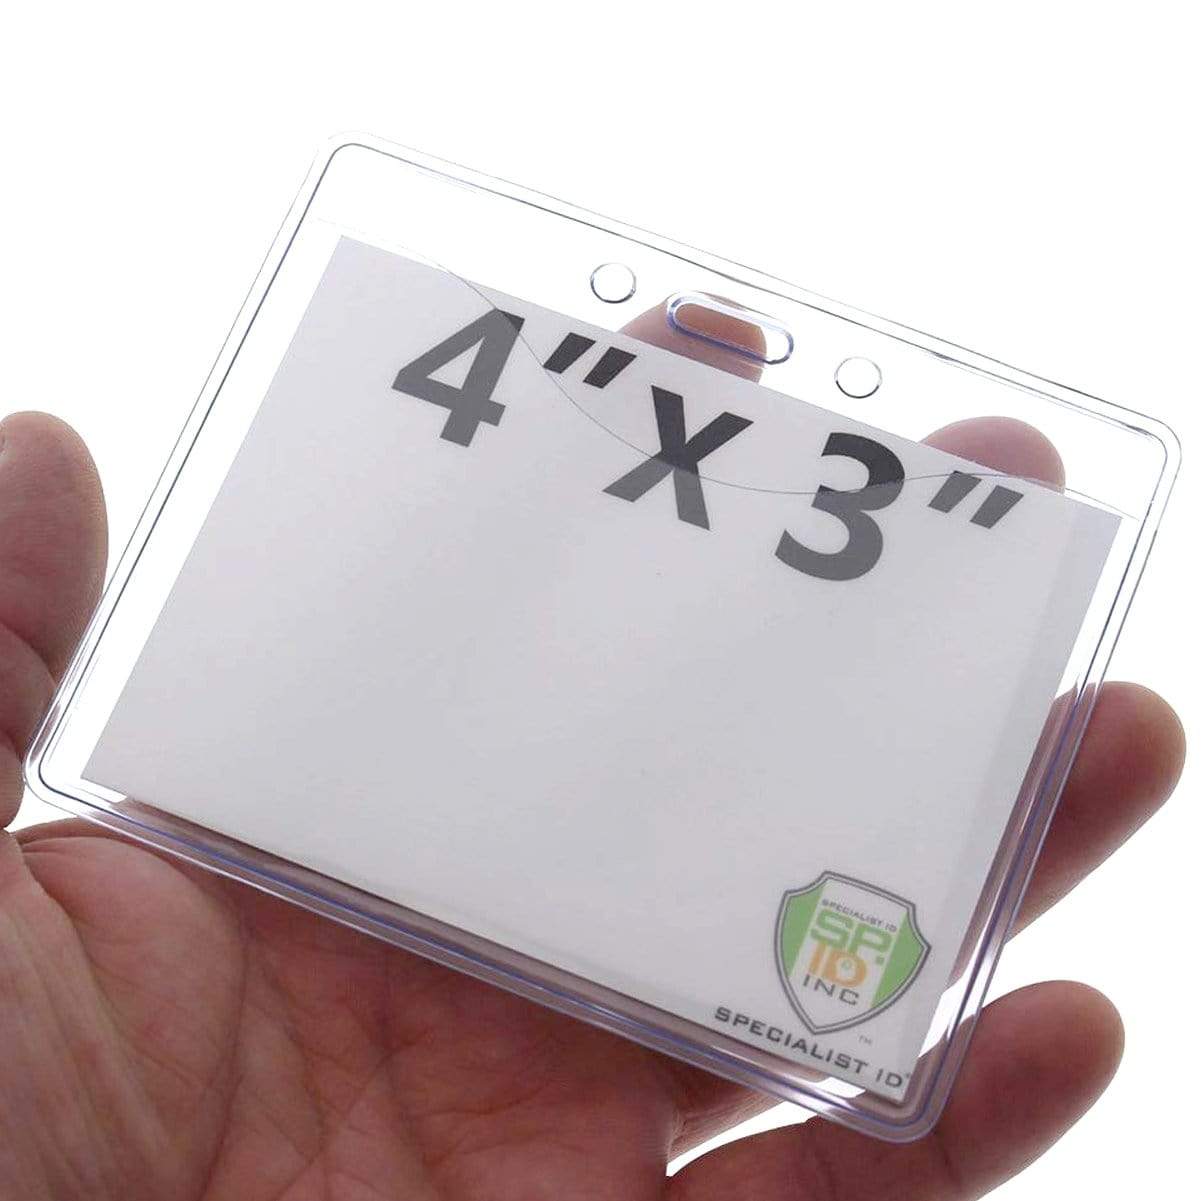 Security Badge Standard Shield (Acrylic Holder)